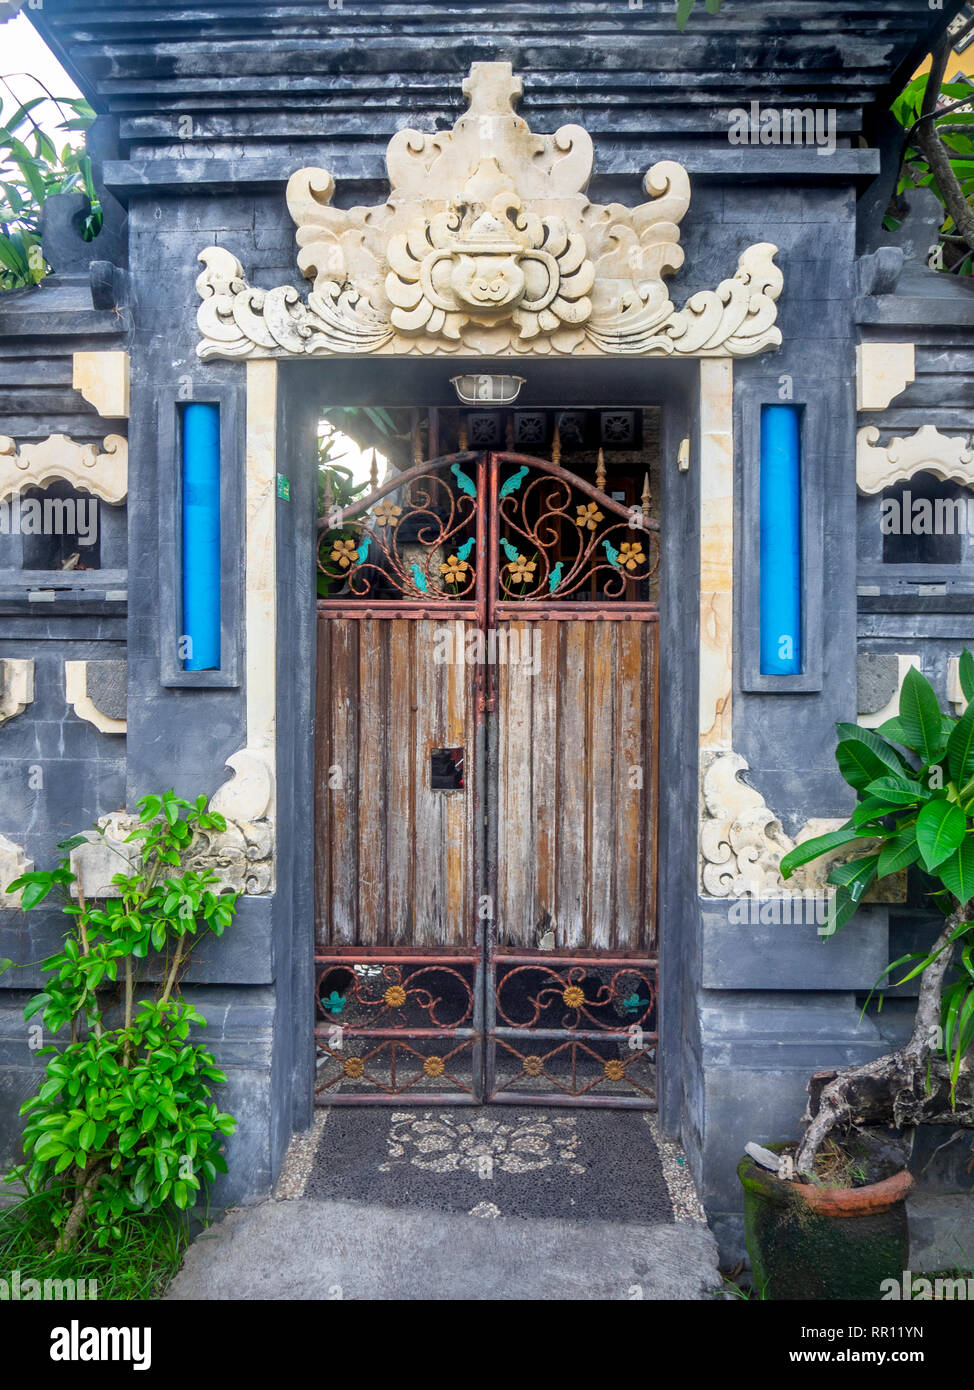 Ornate rustic gate at entrance to pura Hindu Temple in Jimbaran Bay Bali Indonesia. Stock Photo